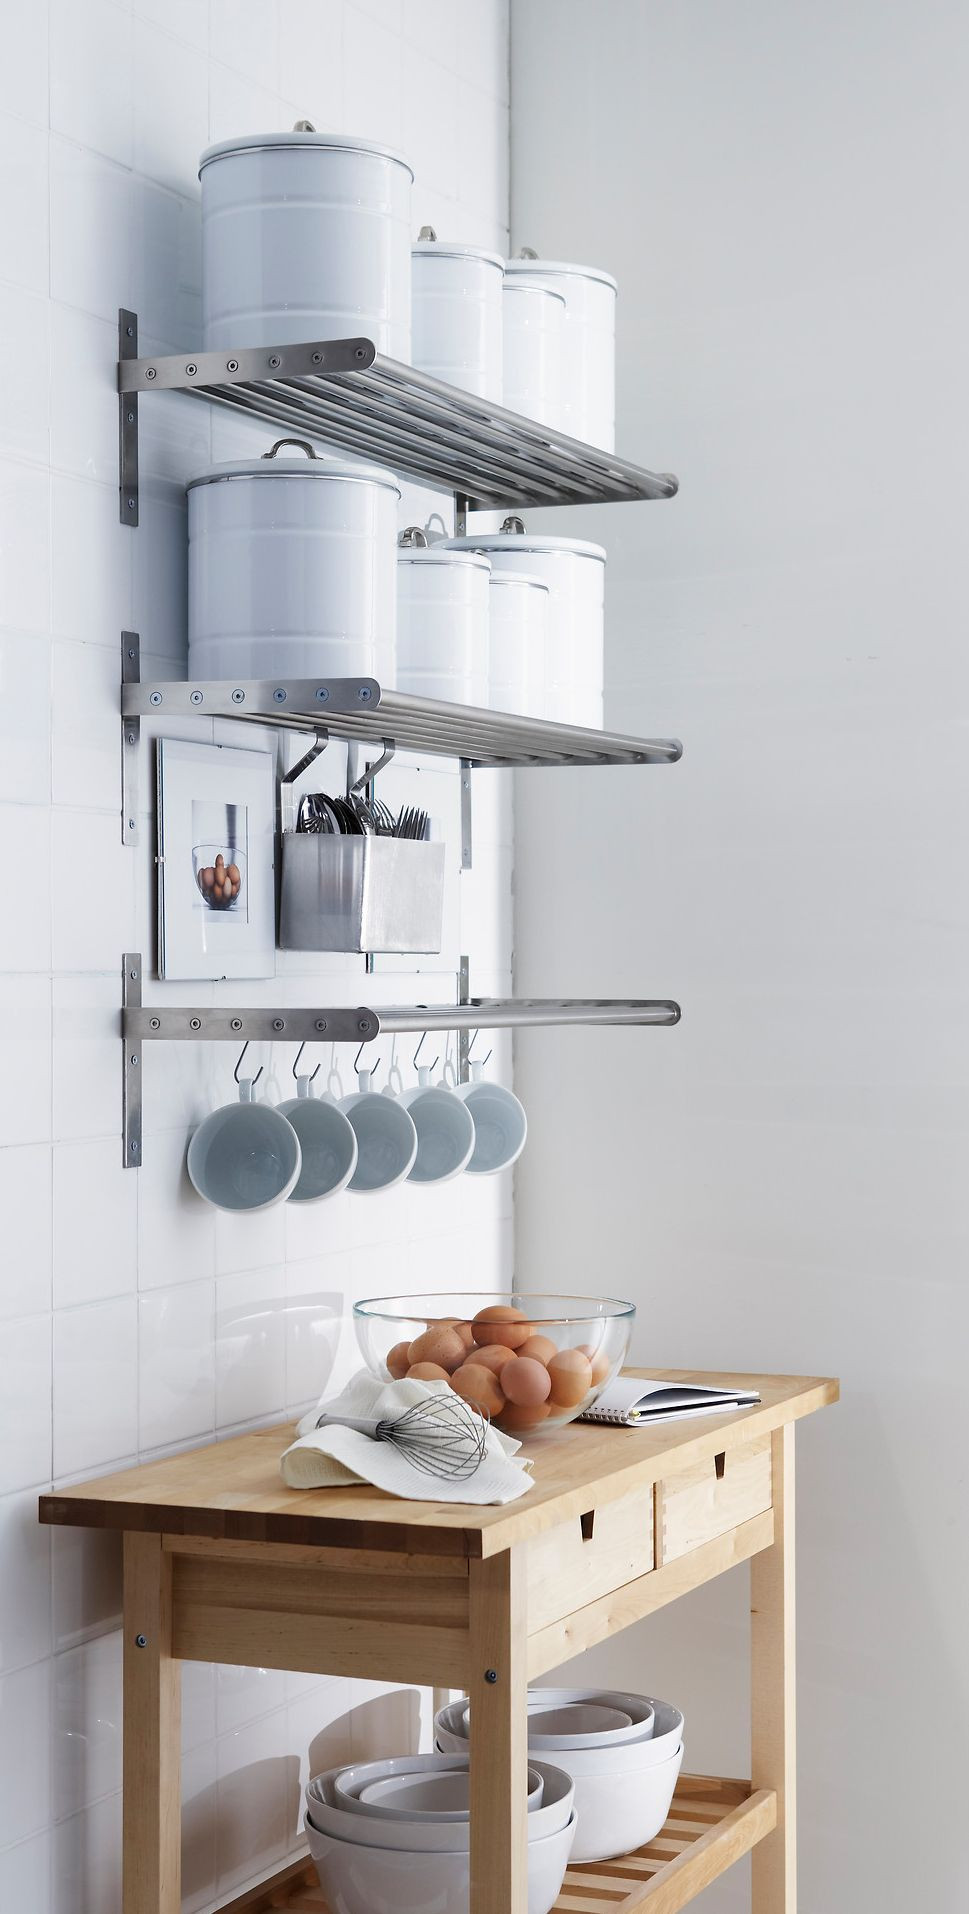 Kitchen Organizers Ikea
 65 Ingenious Kitchen Organization Tips And Storage Ideas